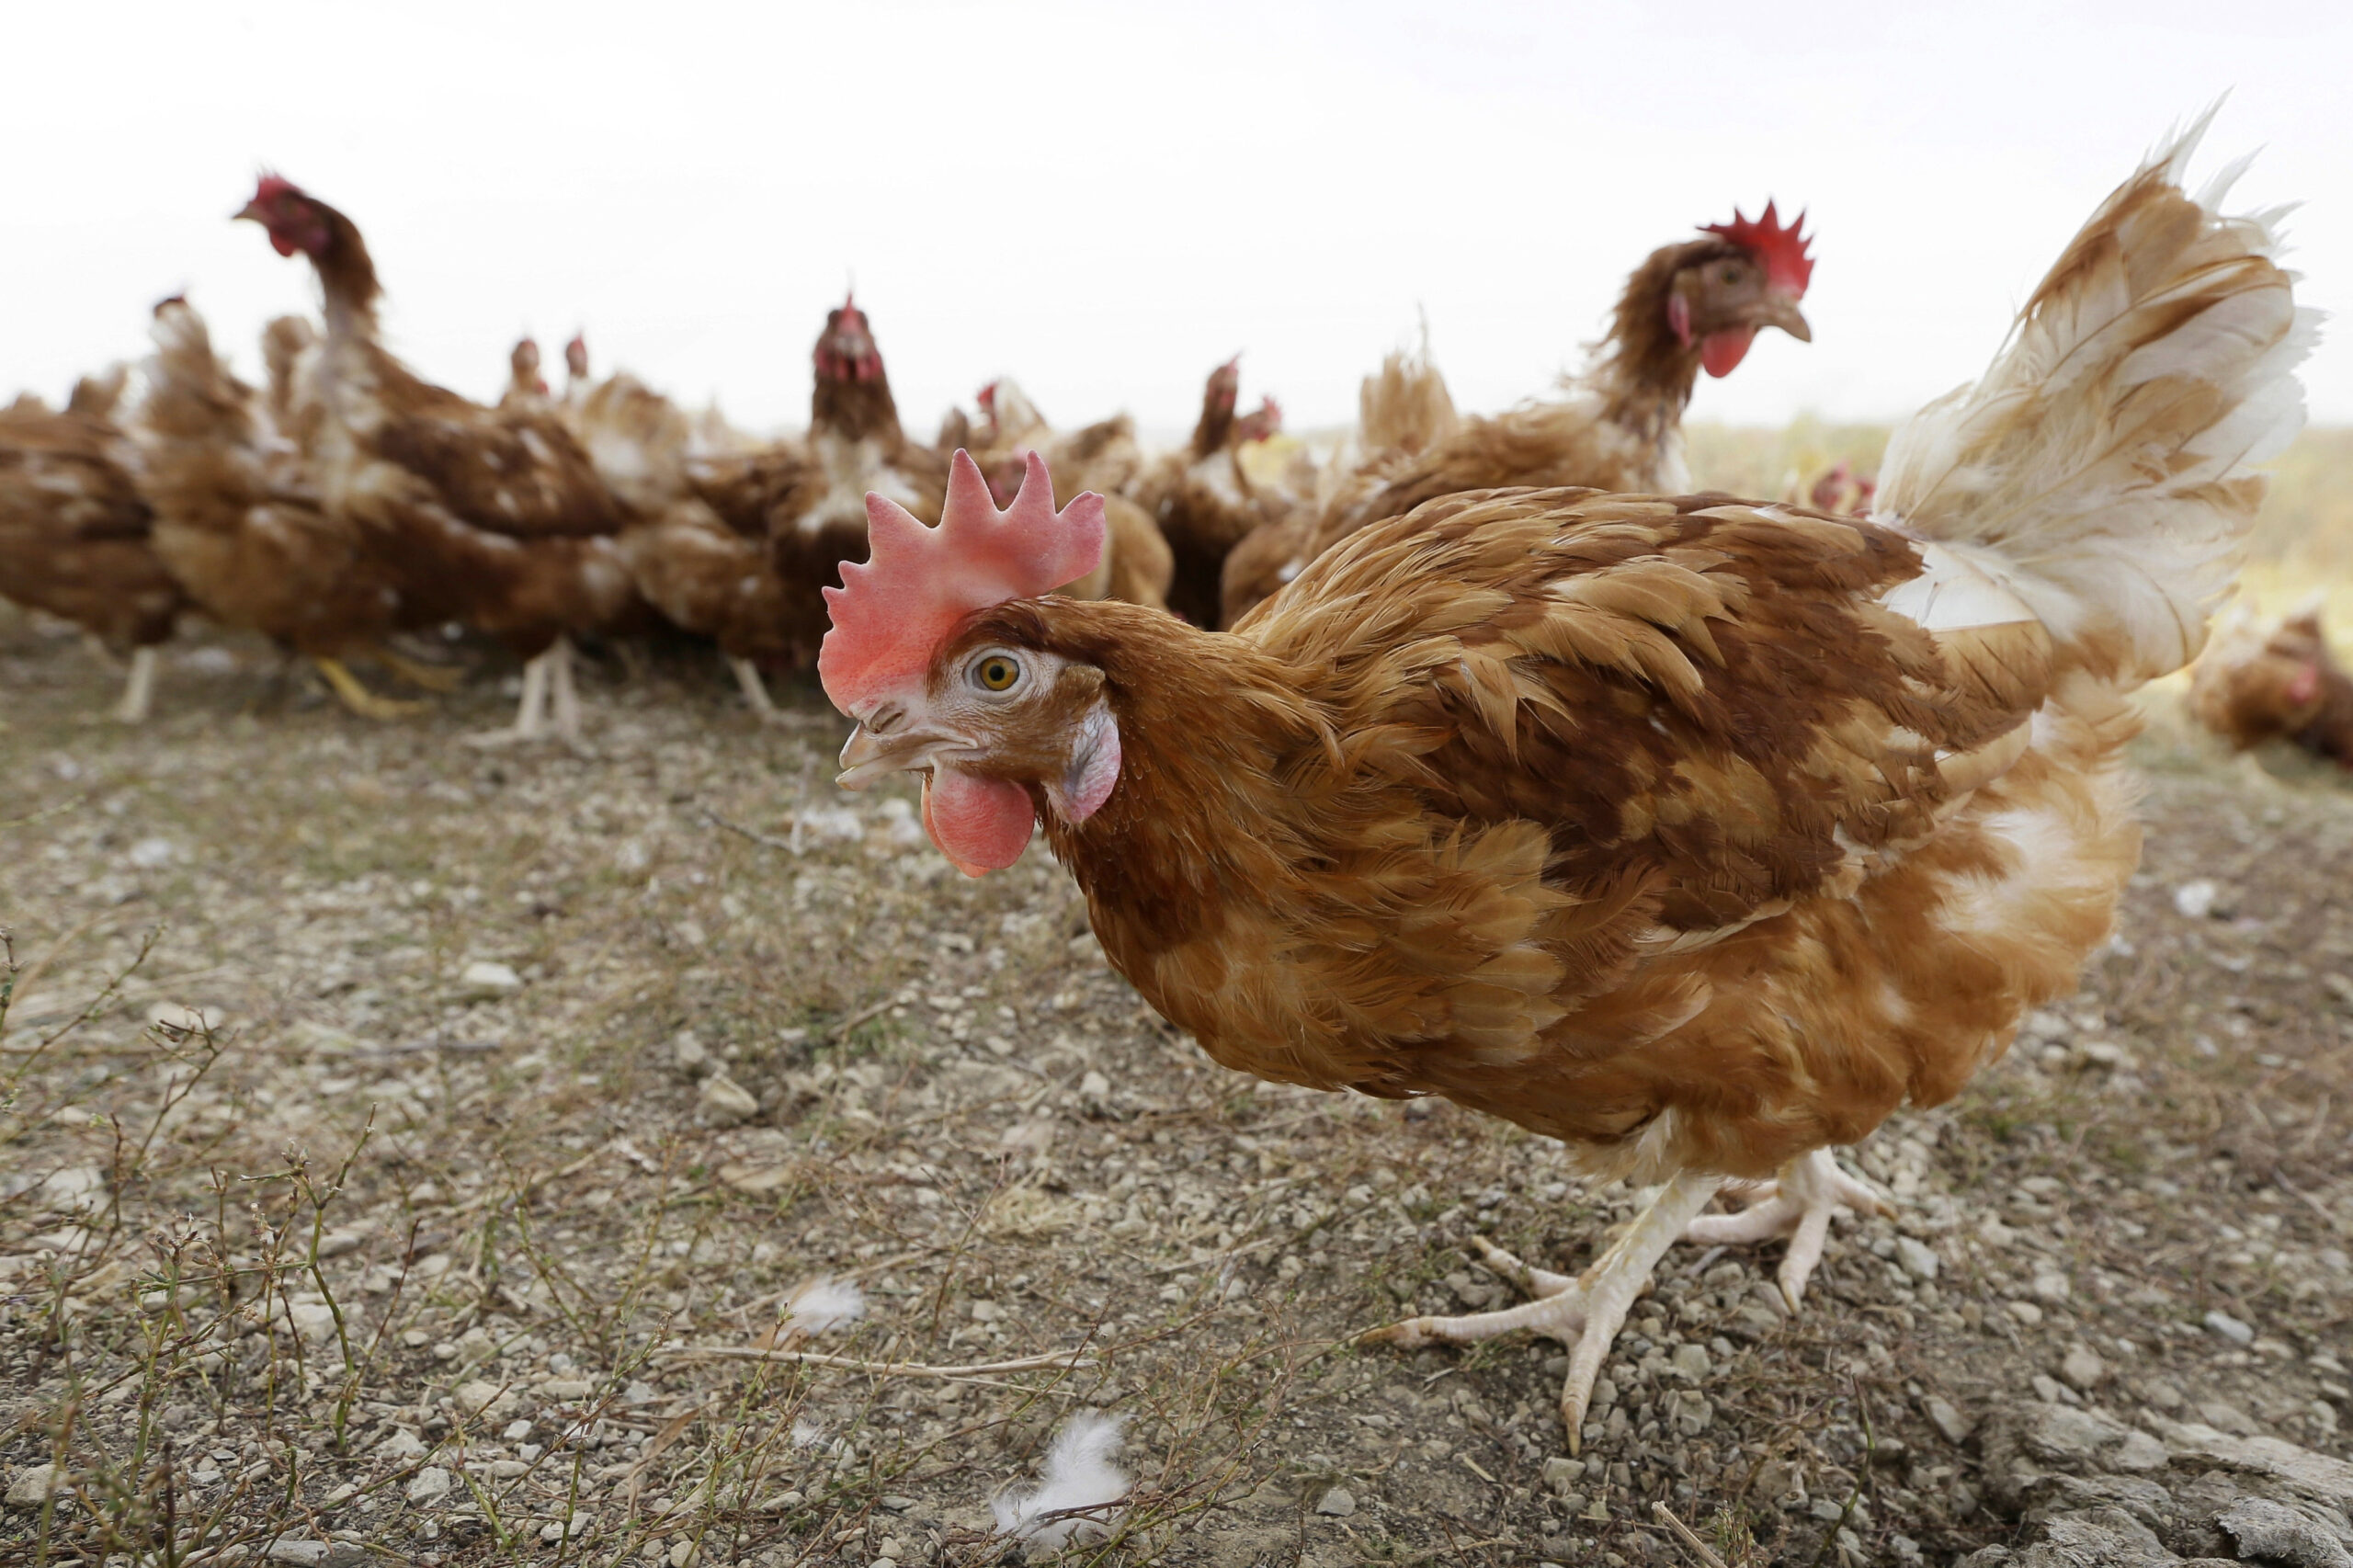 Highly contagious bird flu detected in wild birds in Wisconsin